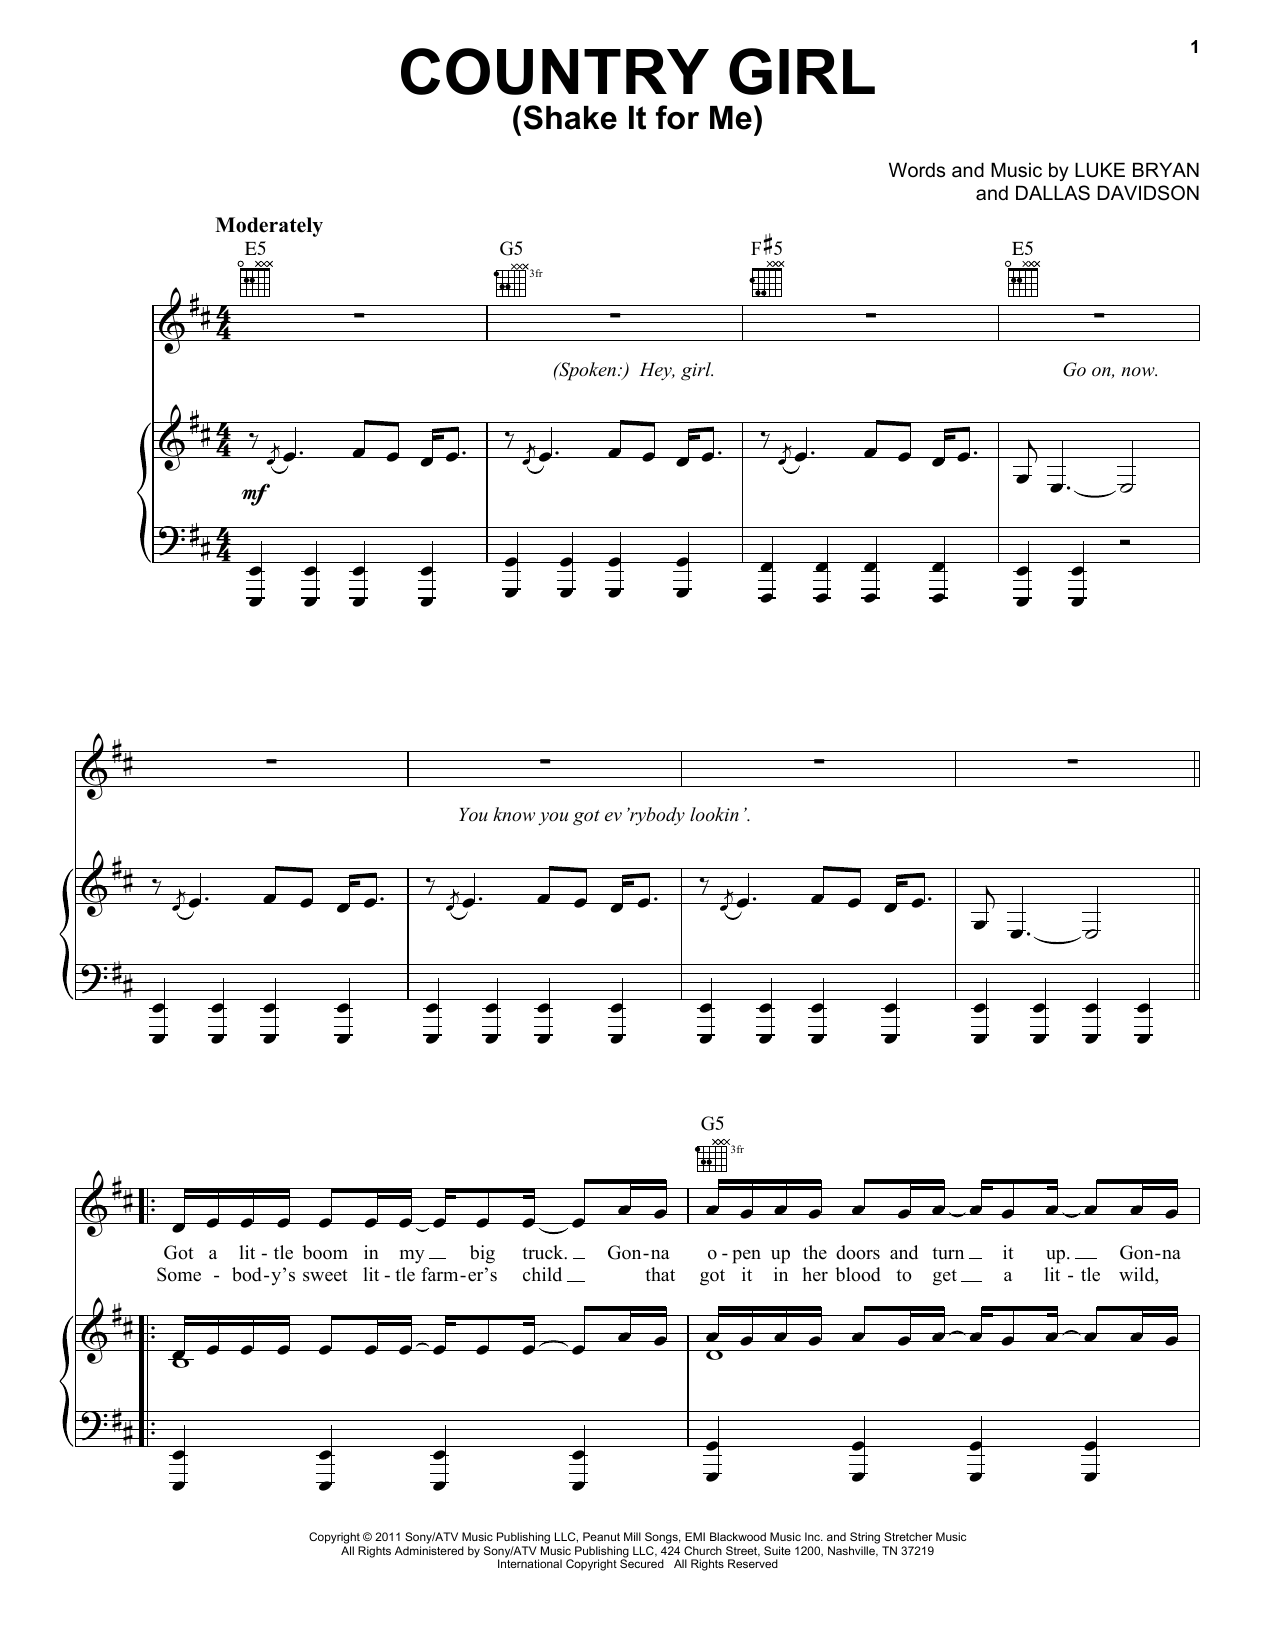 Luke Bryan Country Girl (Shake It For Me) Sheet Music Notes & Chords for Guitar Tab - Download or Print PDF